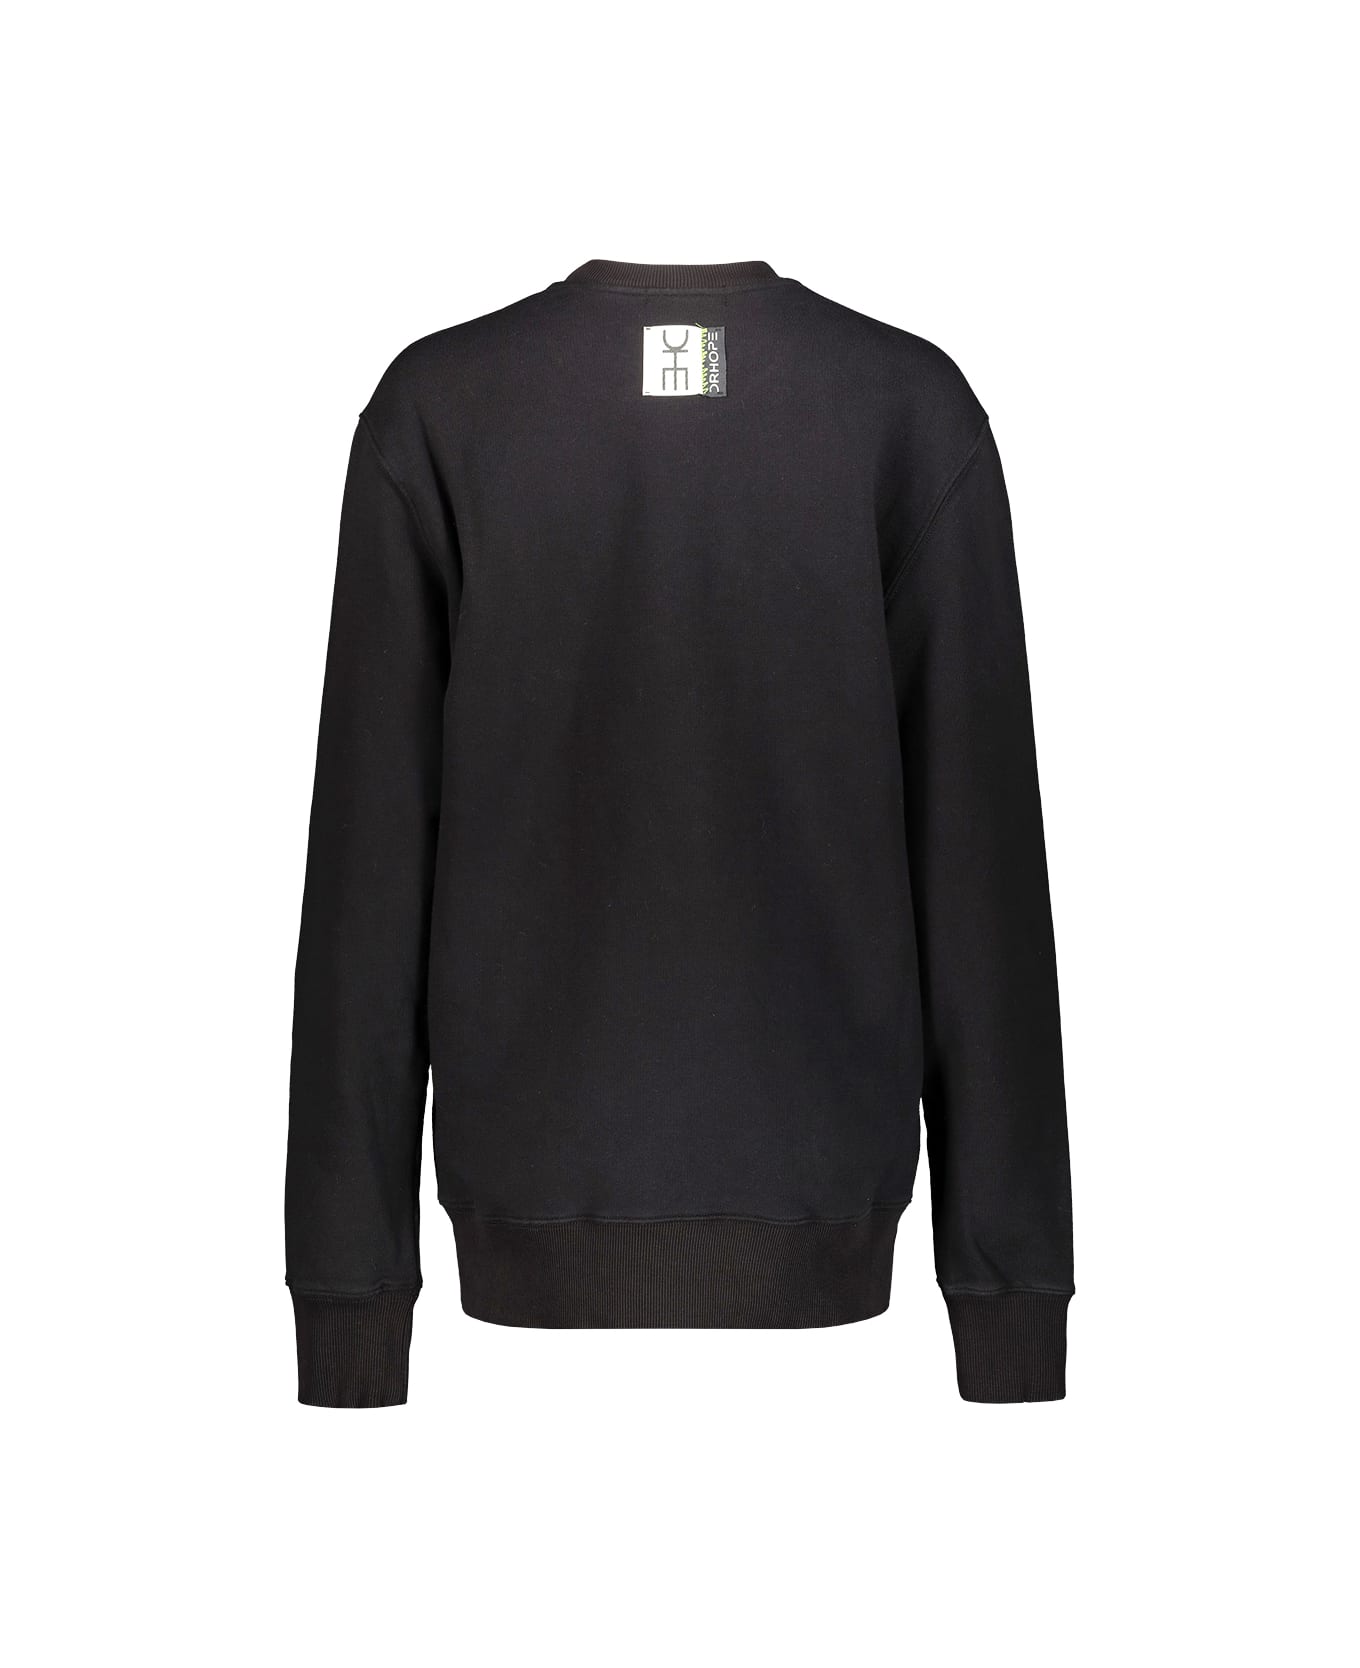 Drhope Black Crewneck Sweatshirt - Black